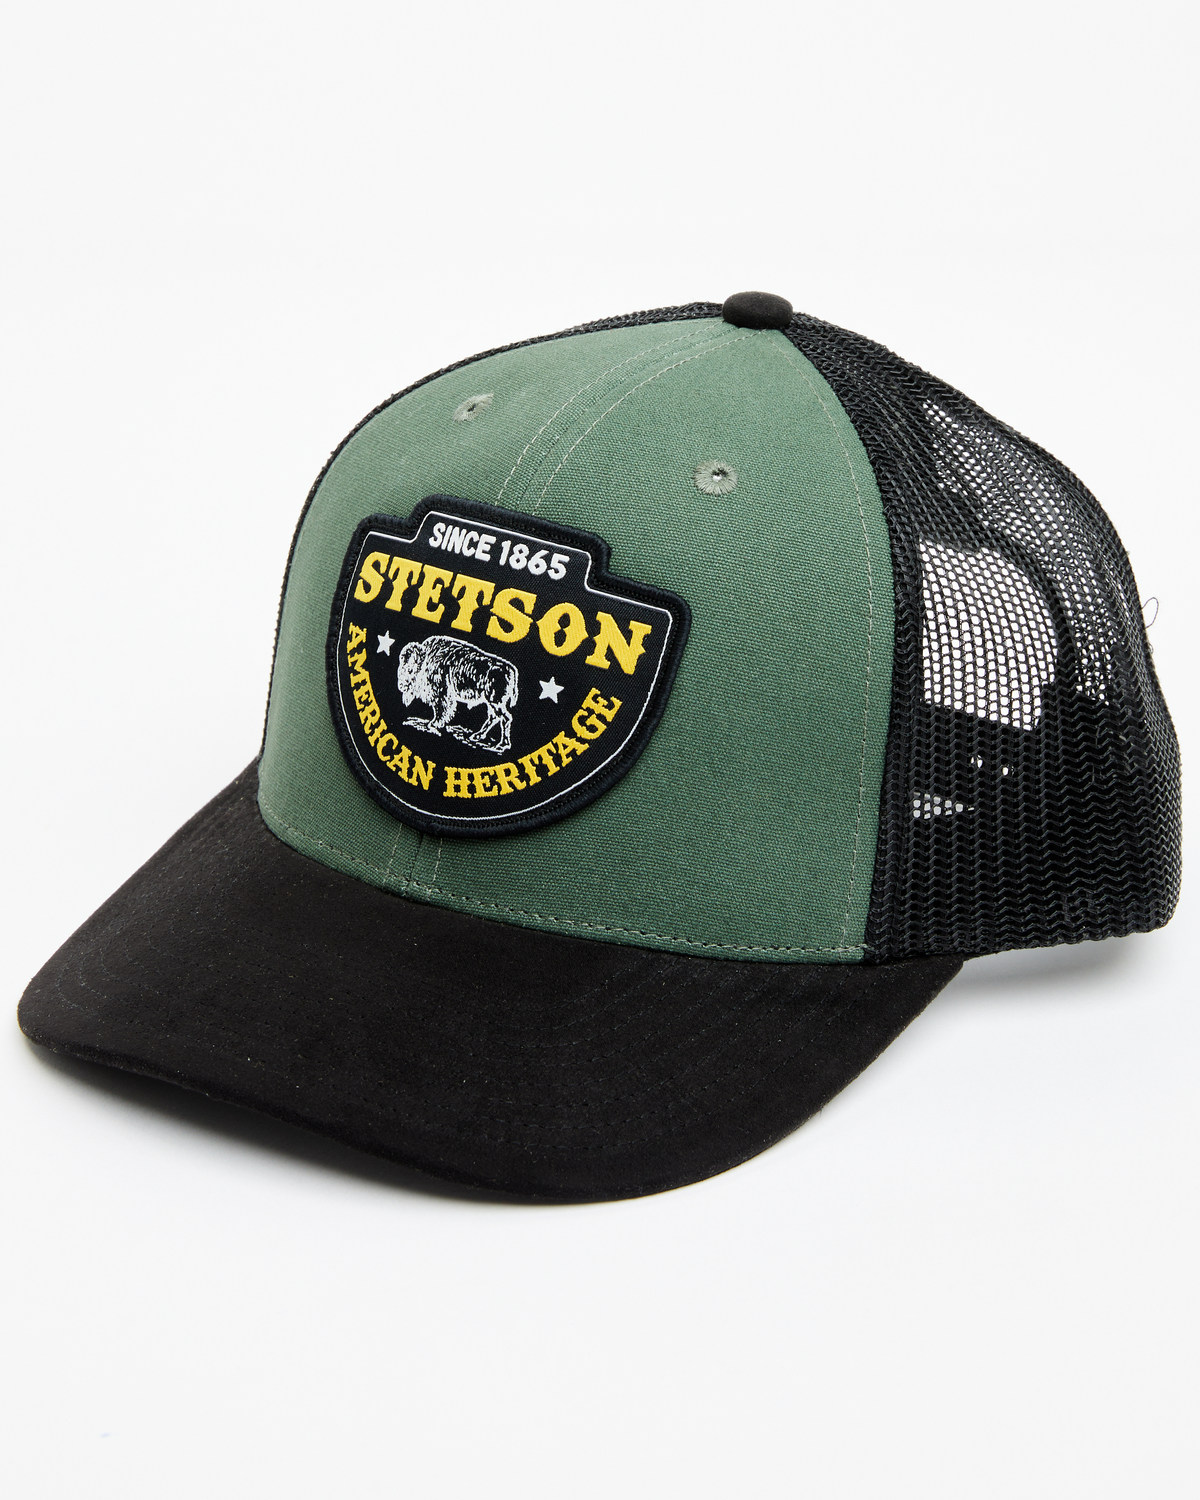 Stetson Men's Bison Patch Trucker Cap